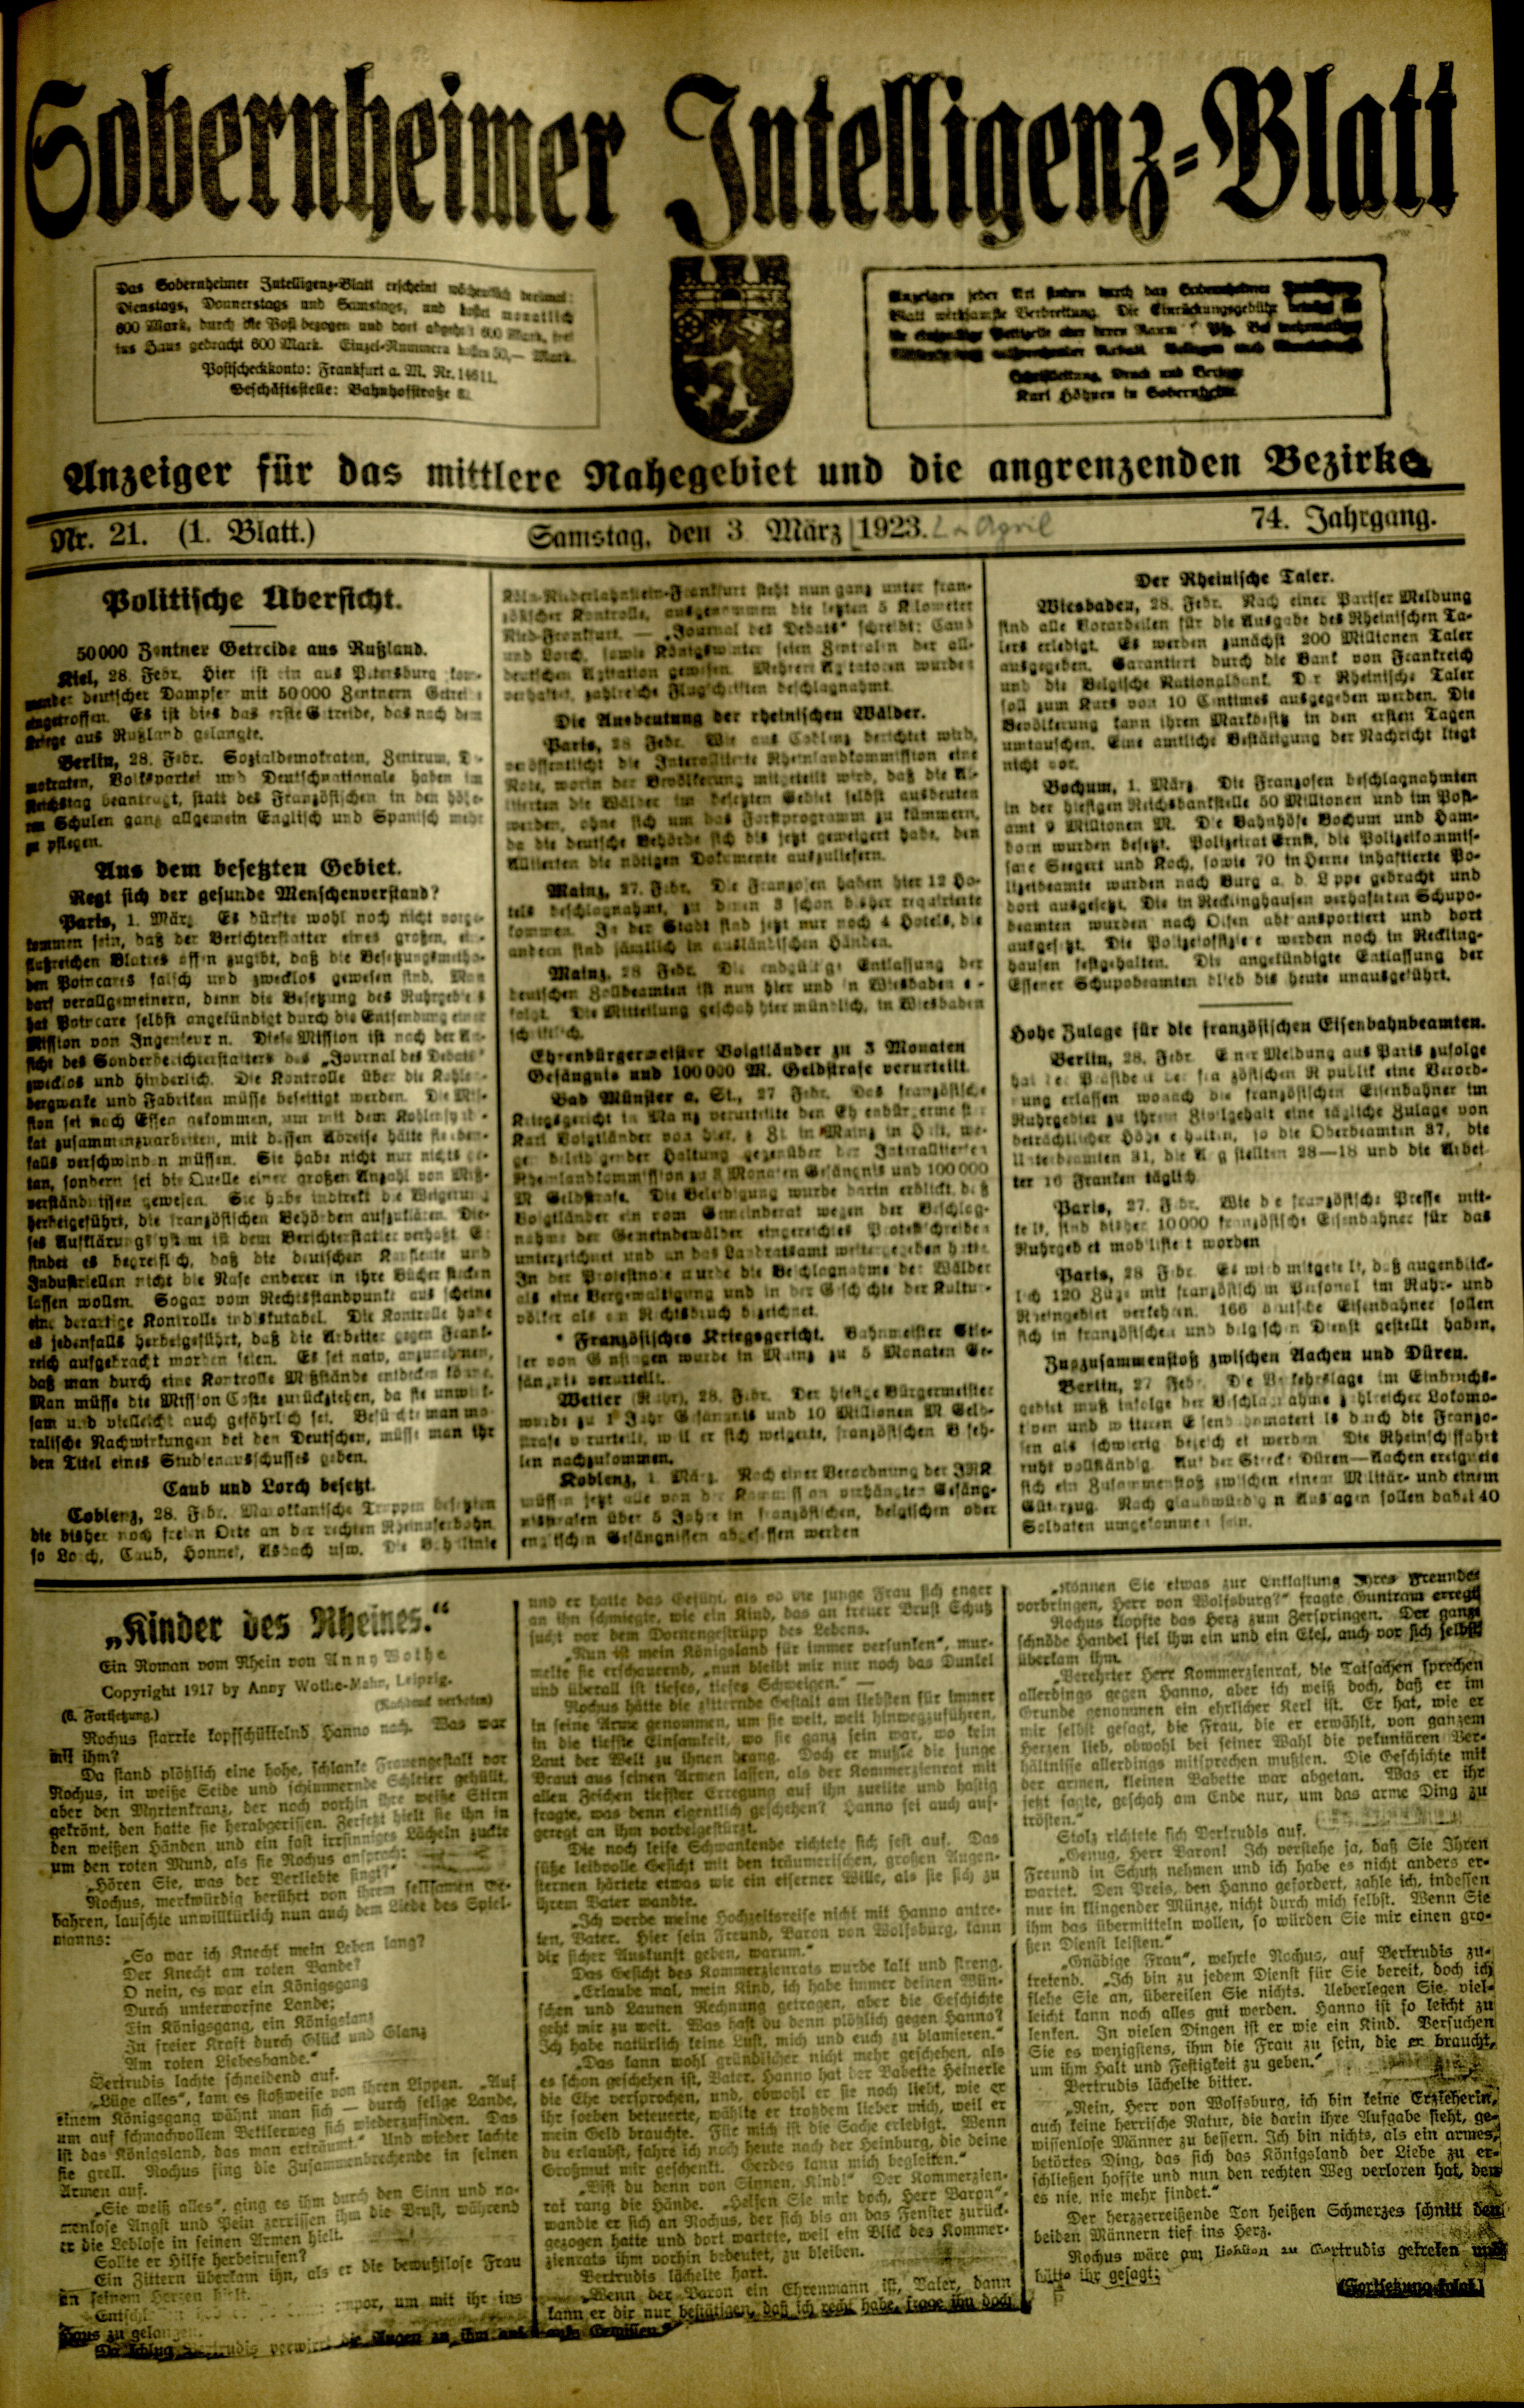 Zeitung: Sobernheimer Intelligenzblatt; März 1923, Jg. 73 Nr. 21 (Heimatmuseum Bad Sobernheim CC BY-NC-SA)